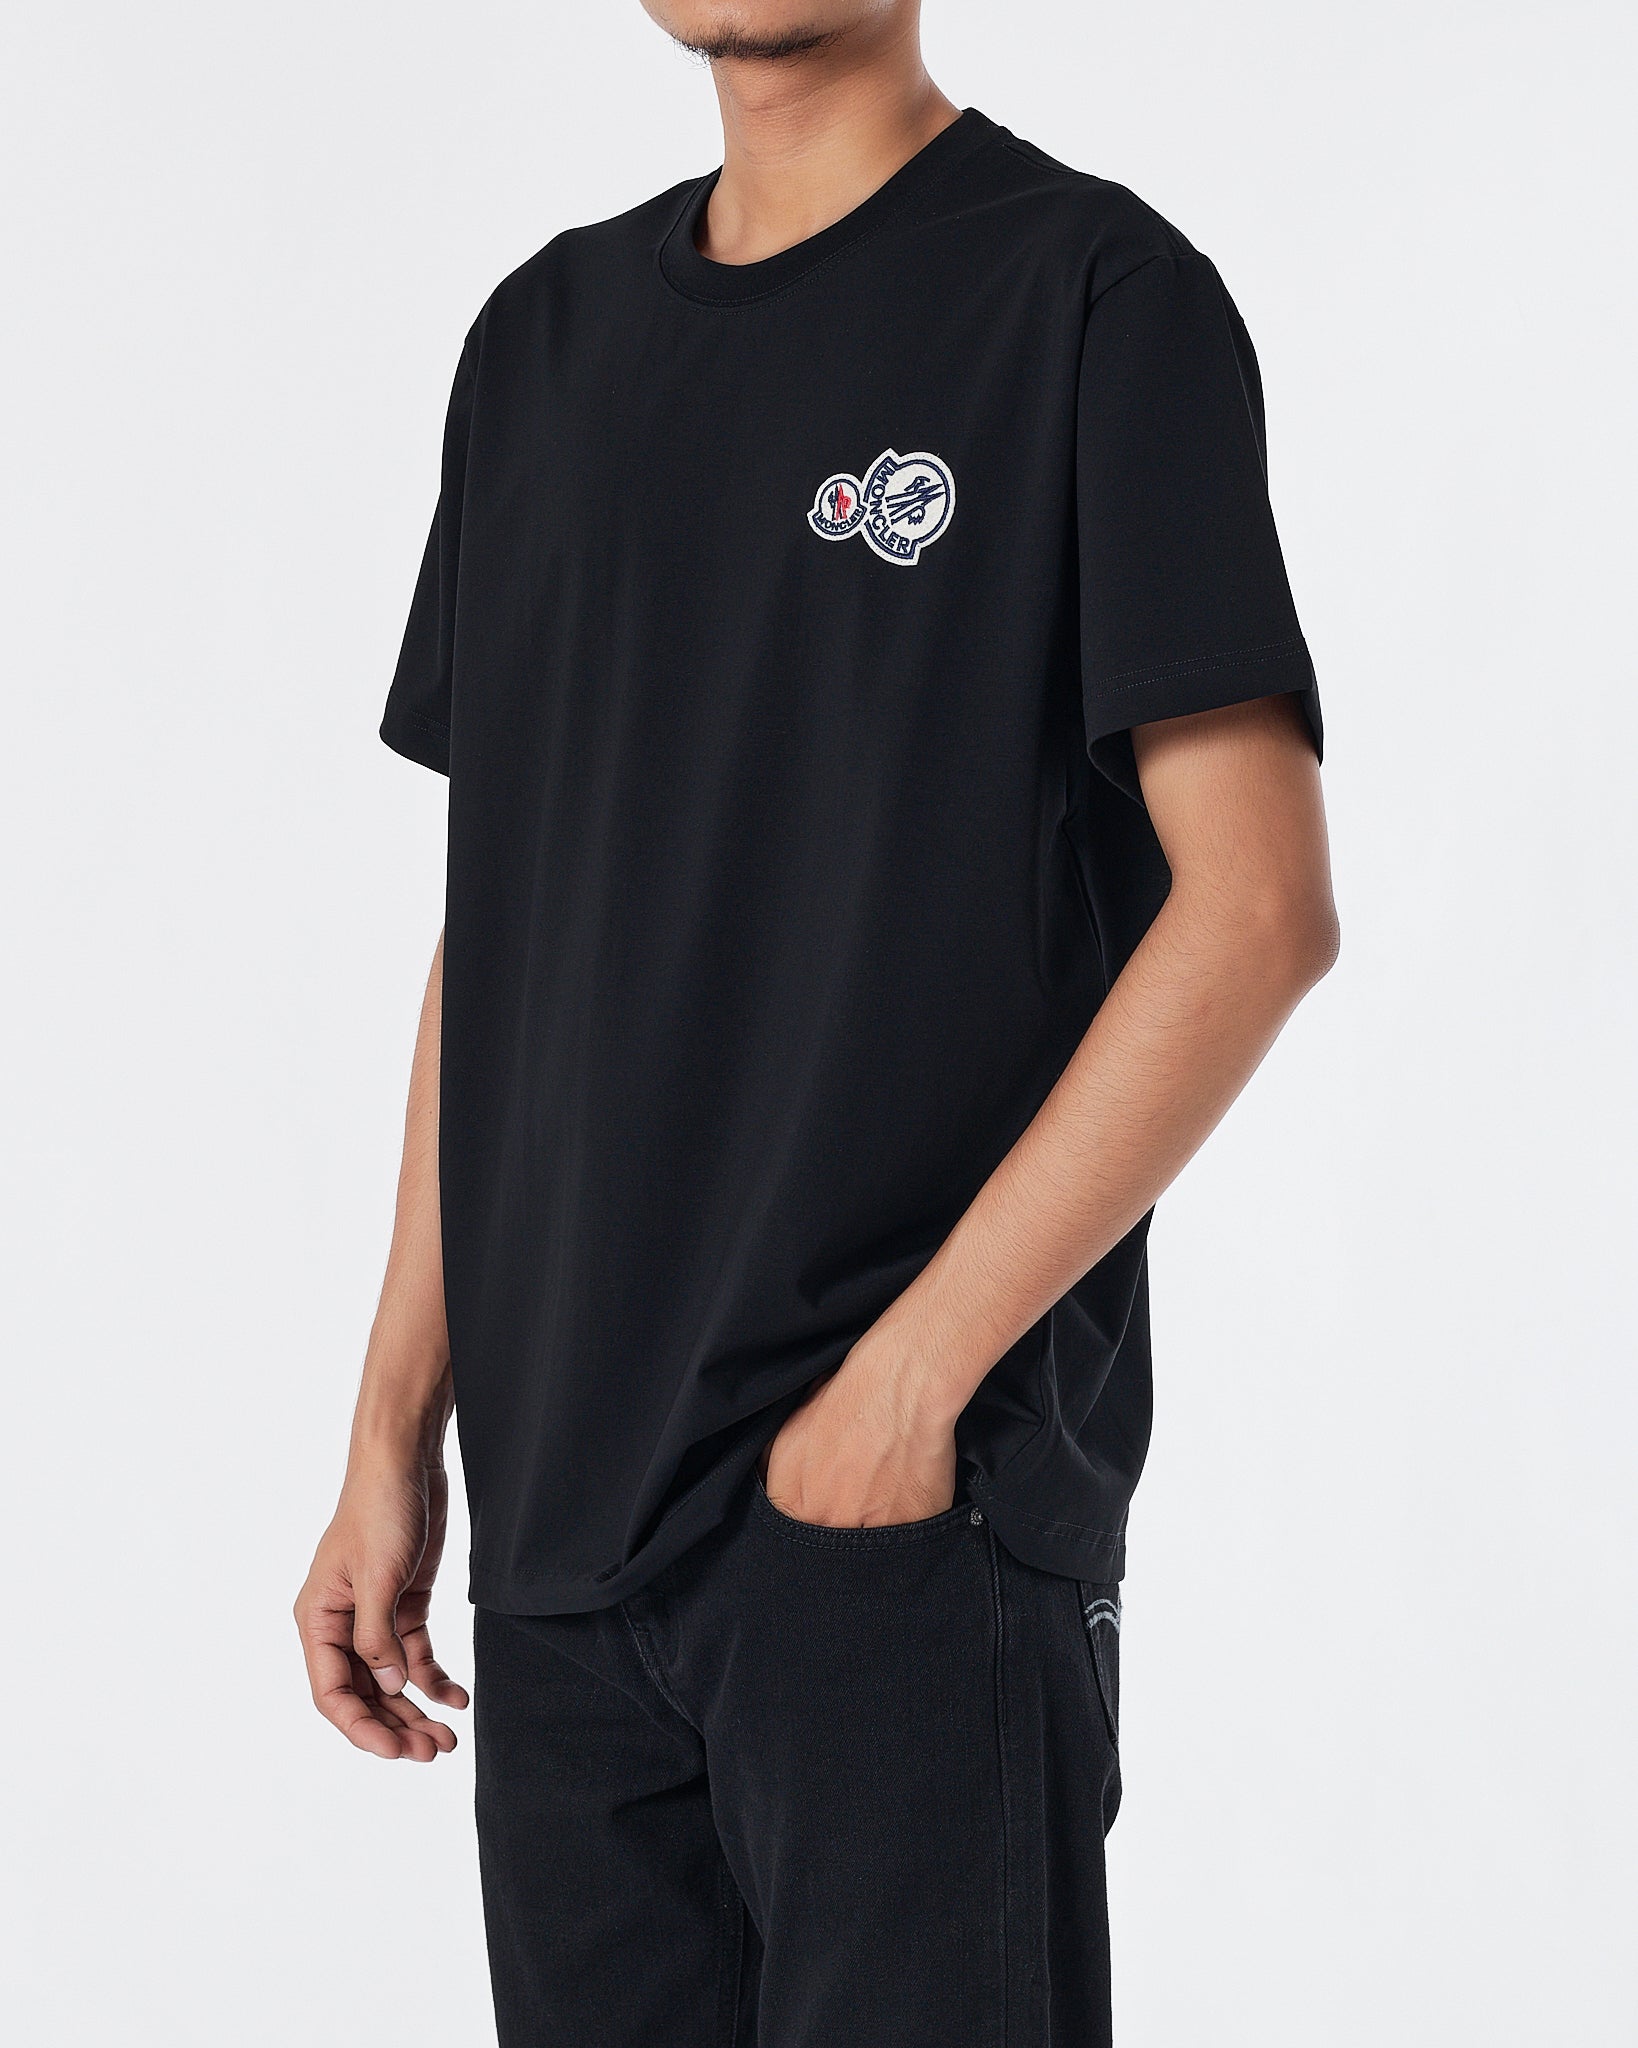 MON Logo Embroidered Men Black T-Shirt 15.90